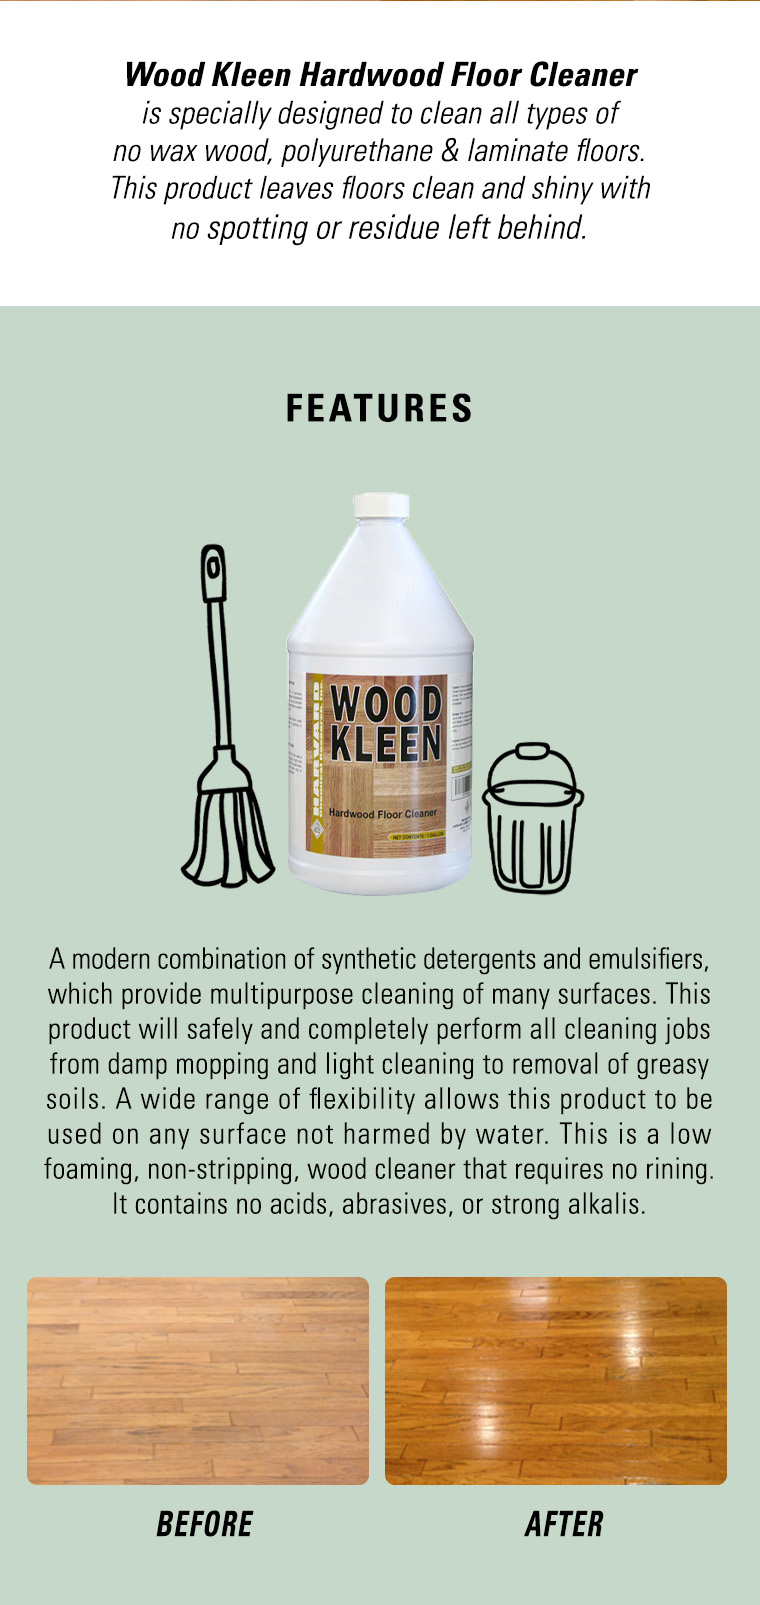 woodkleen, hardwood floor cleaner, sealed wood cleaner, detergents, emulsifiers, no rinsing, biodegradable, safe on floors.